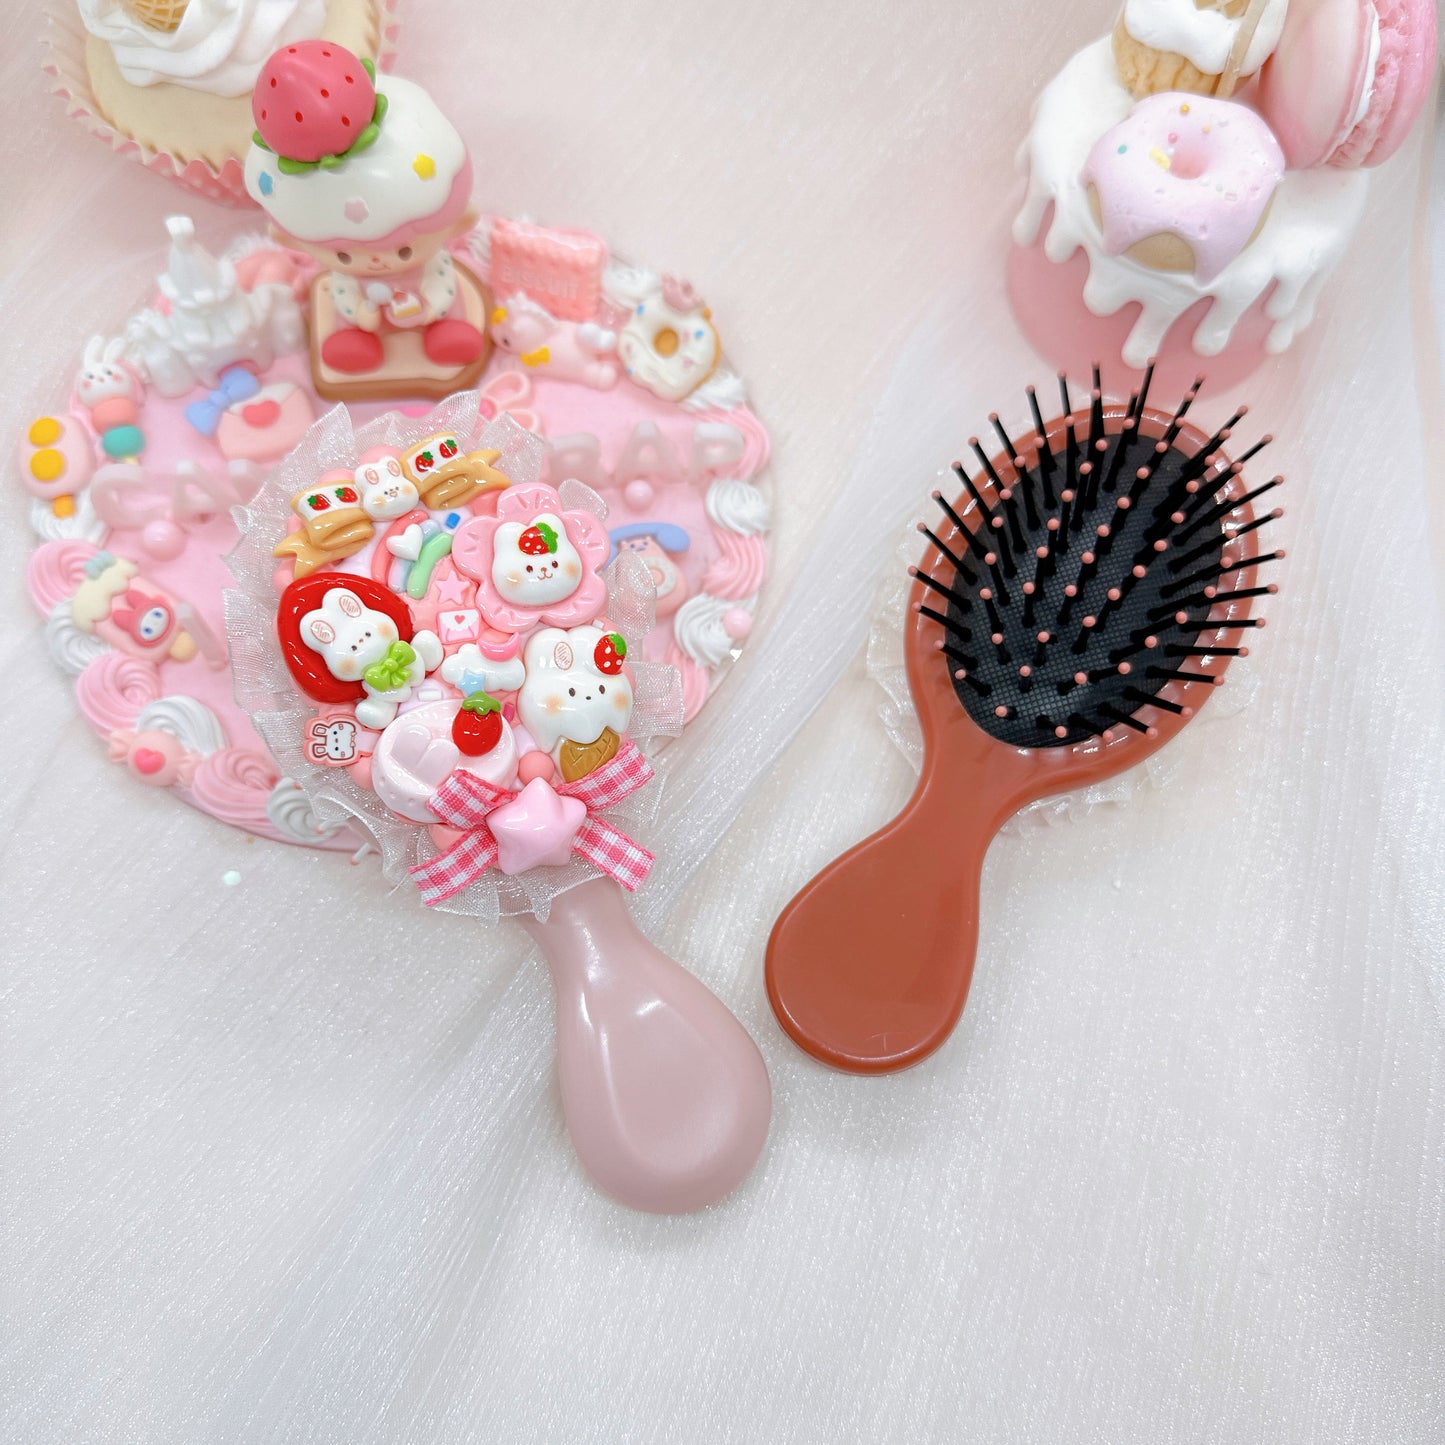 Handmade hairbrush with lace, Kawaii Decoden Hairbrush, Cute Cartoon Hairbrush